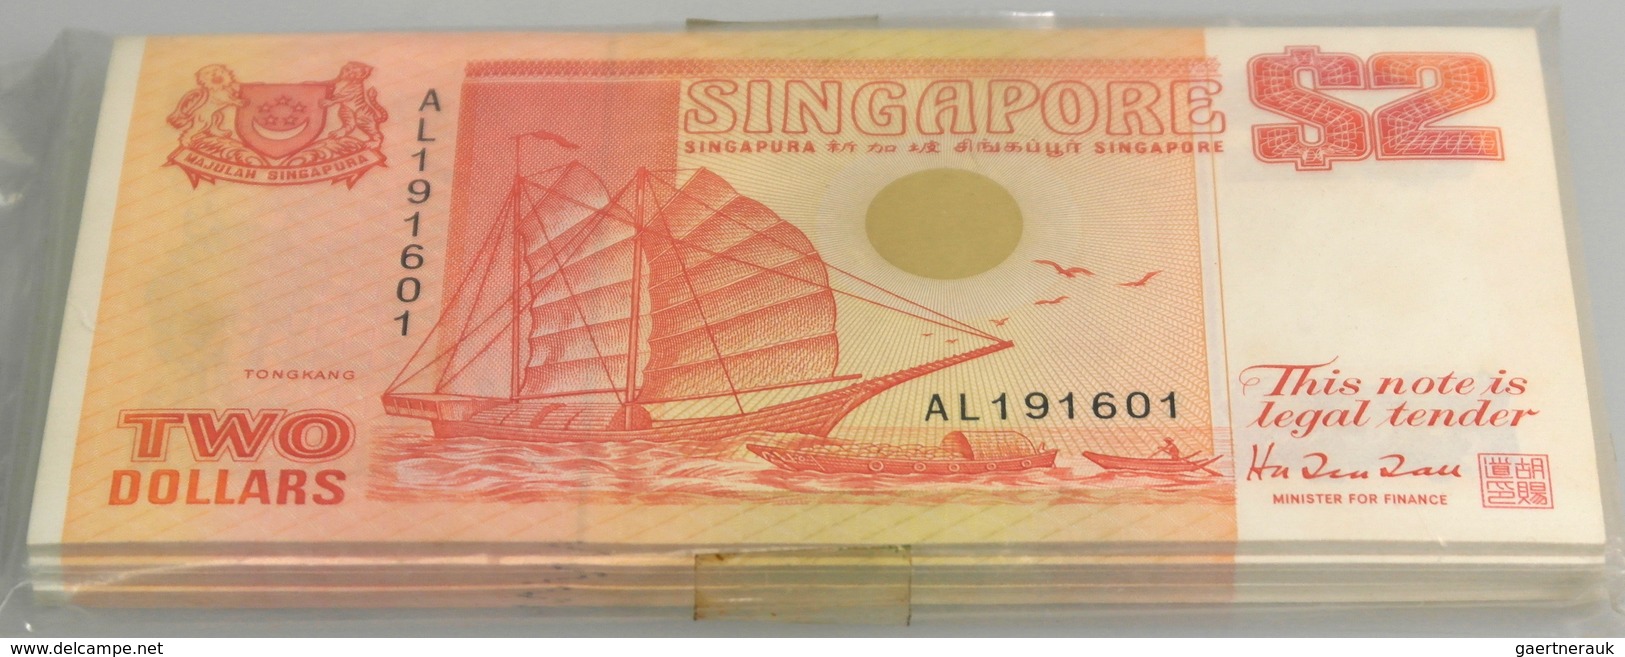 Singapore / Singapur: Origial Bundle Of 100 Pcs 2 Dollars ND P. 27 In UNC. (100 Pcs) - Singapore